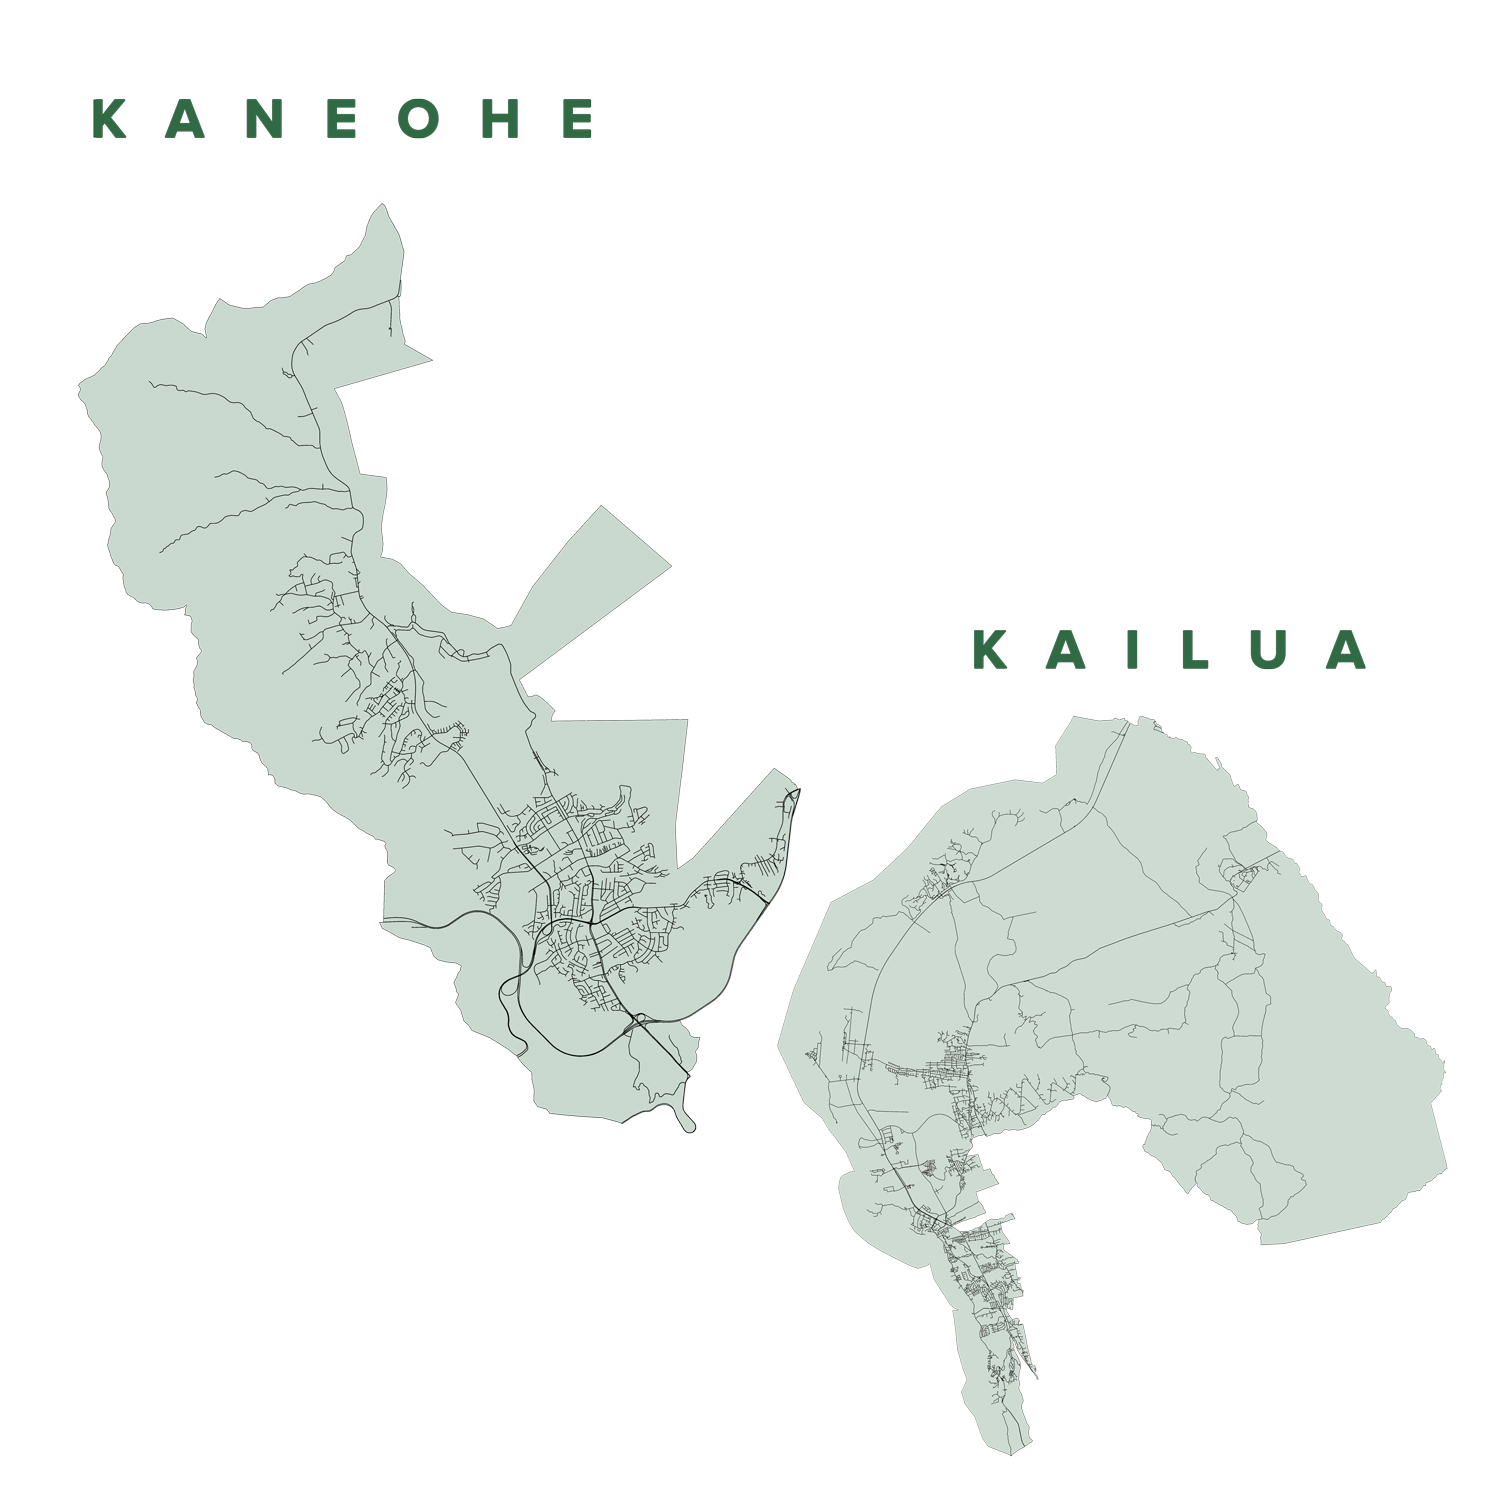 NTCC-Kaneohe-HI-AdobeStock539288939-539289017-kaneohe-kailua-map